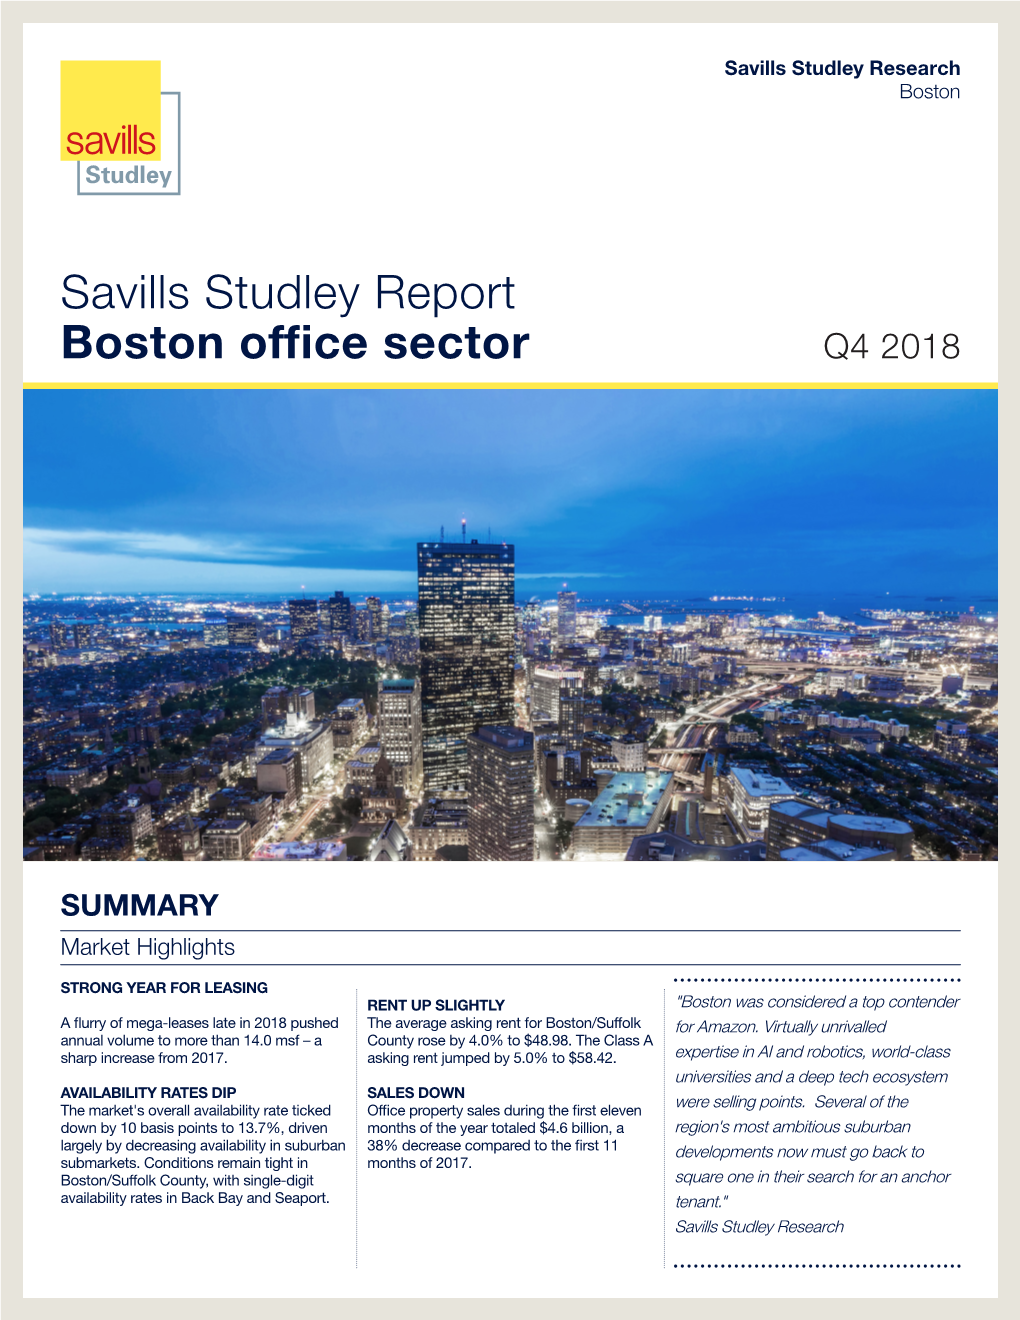 Savills Studley Report Boston Office Sector Q4 2018